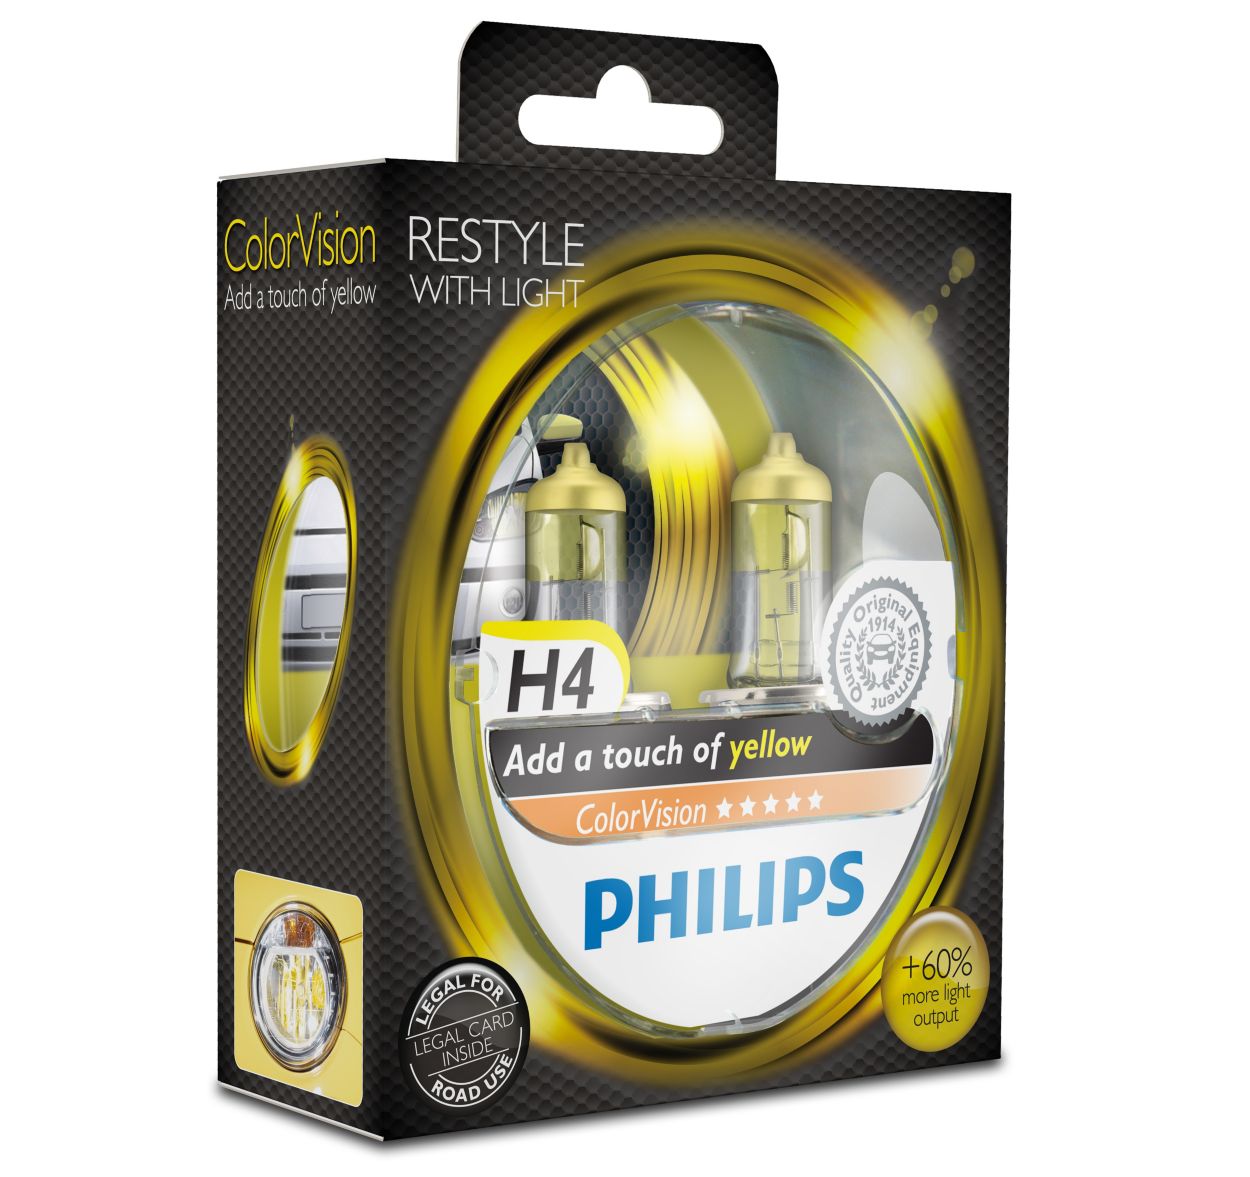 Philips WeatherVision H4 9003 HB2 2900K Yellow Light Car Headlight